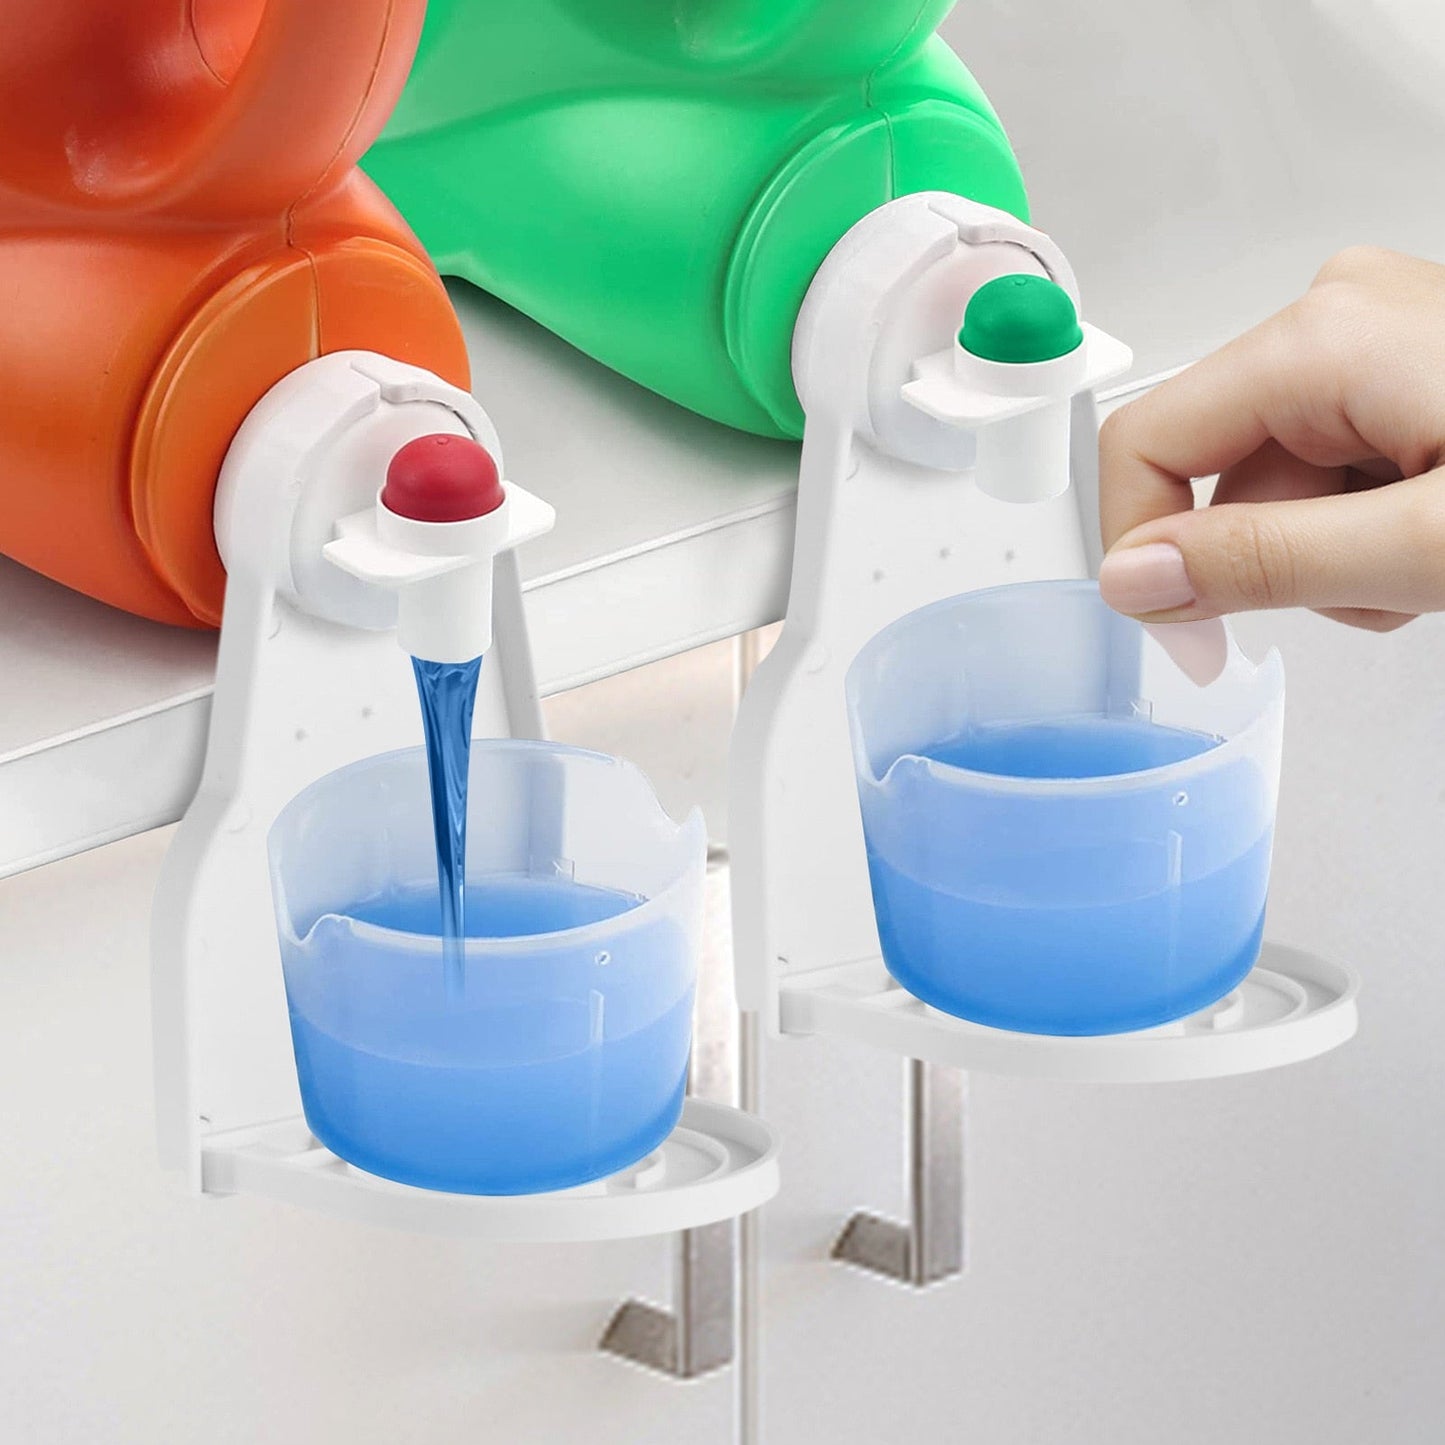 No-Spill Laundry Detergent Drip Catcher Tray